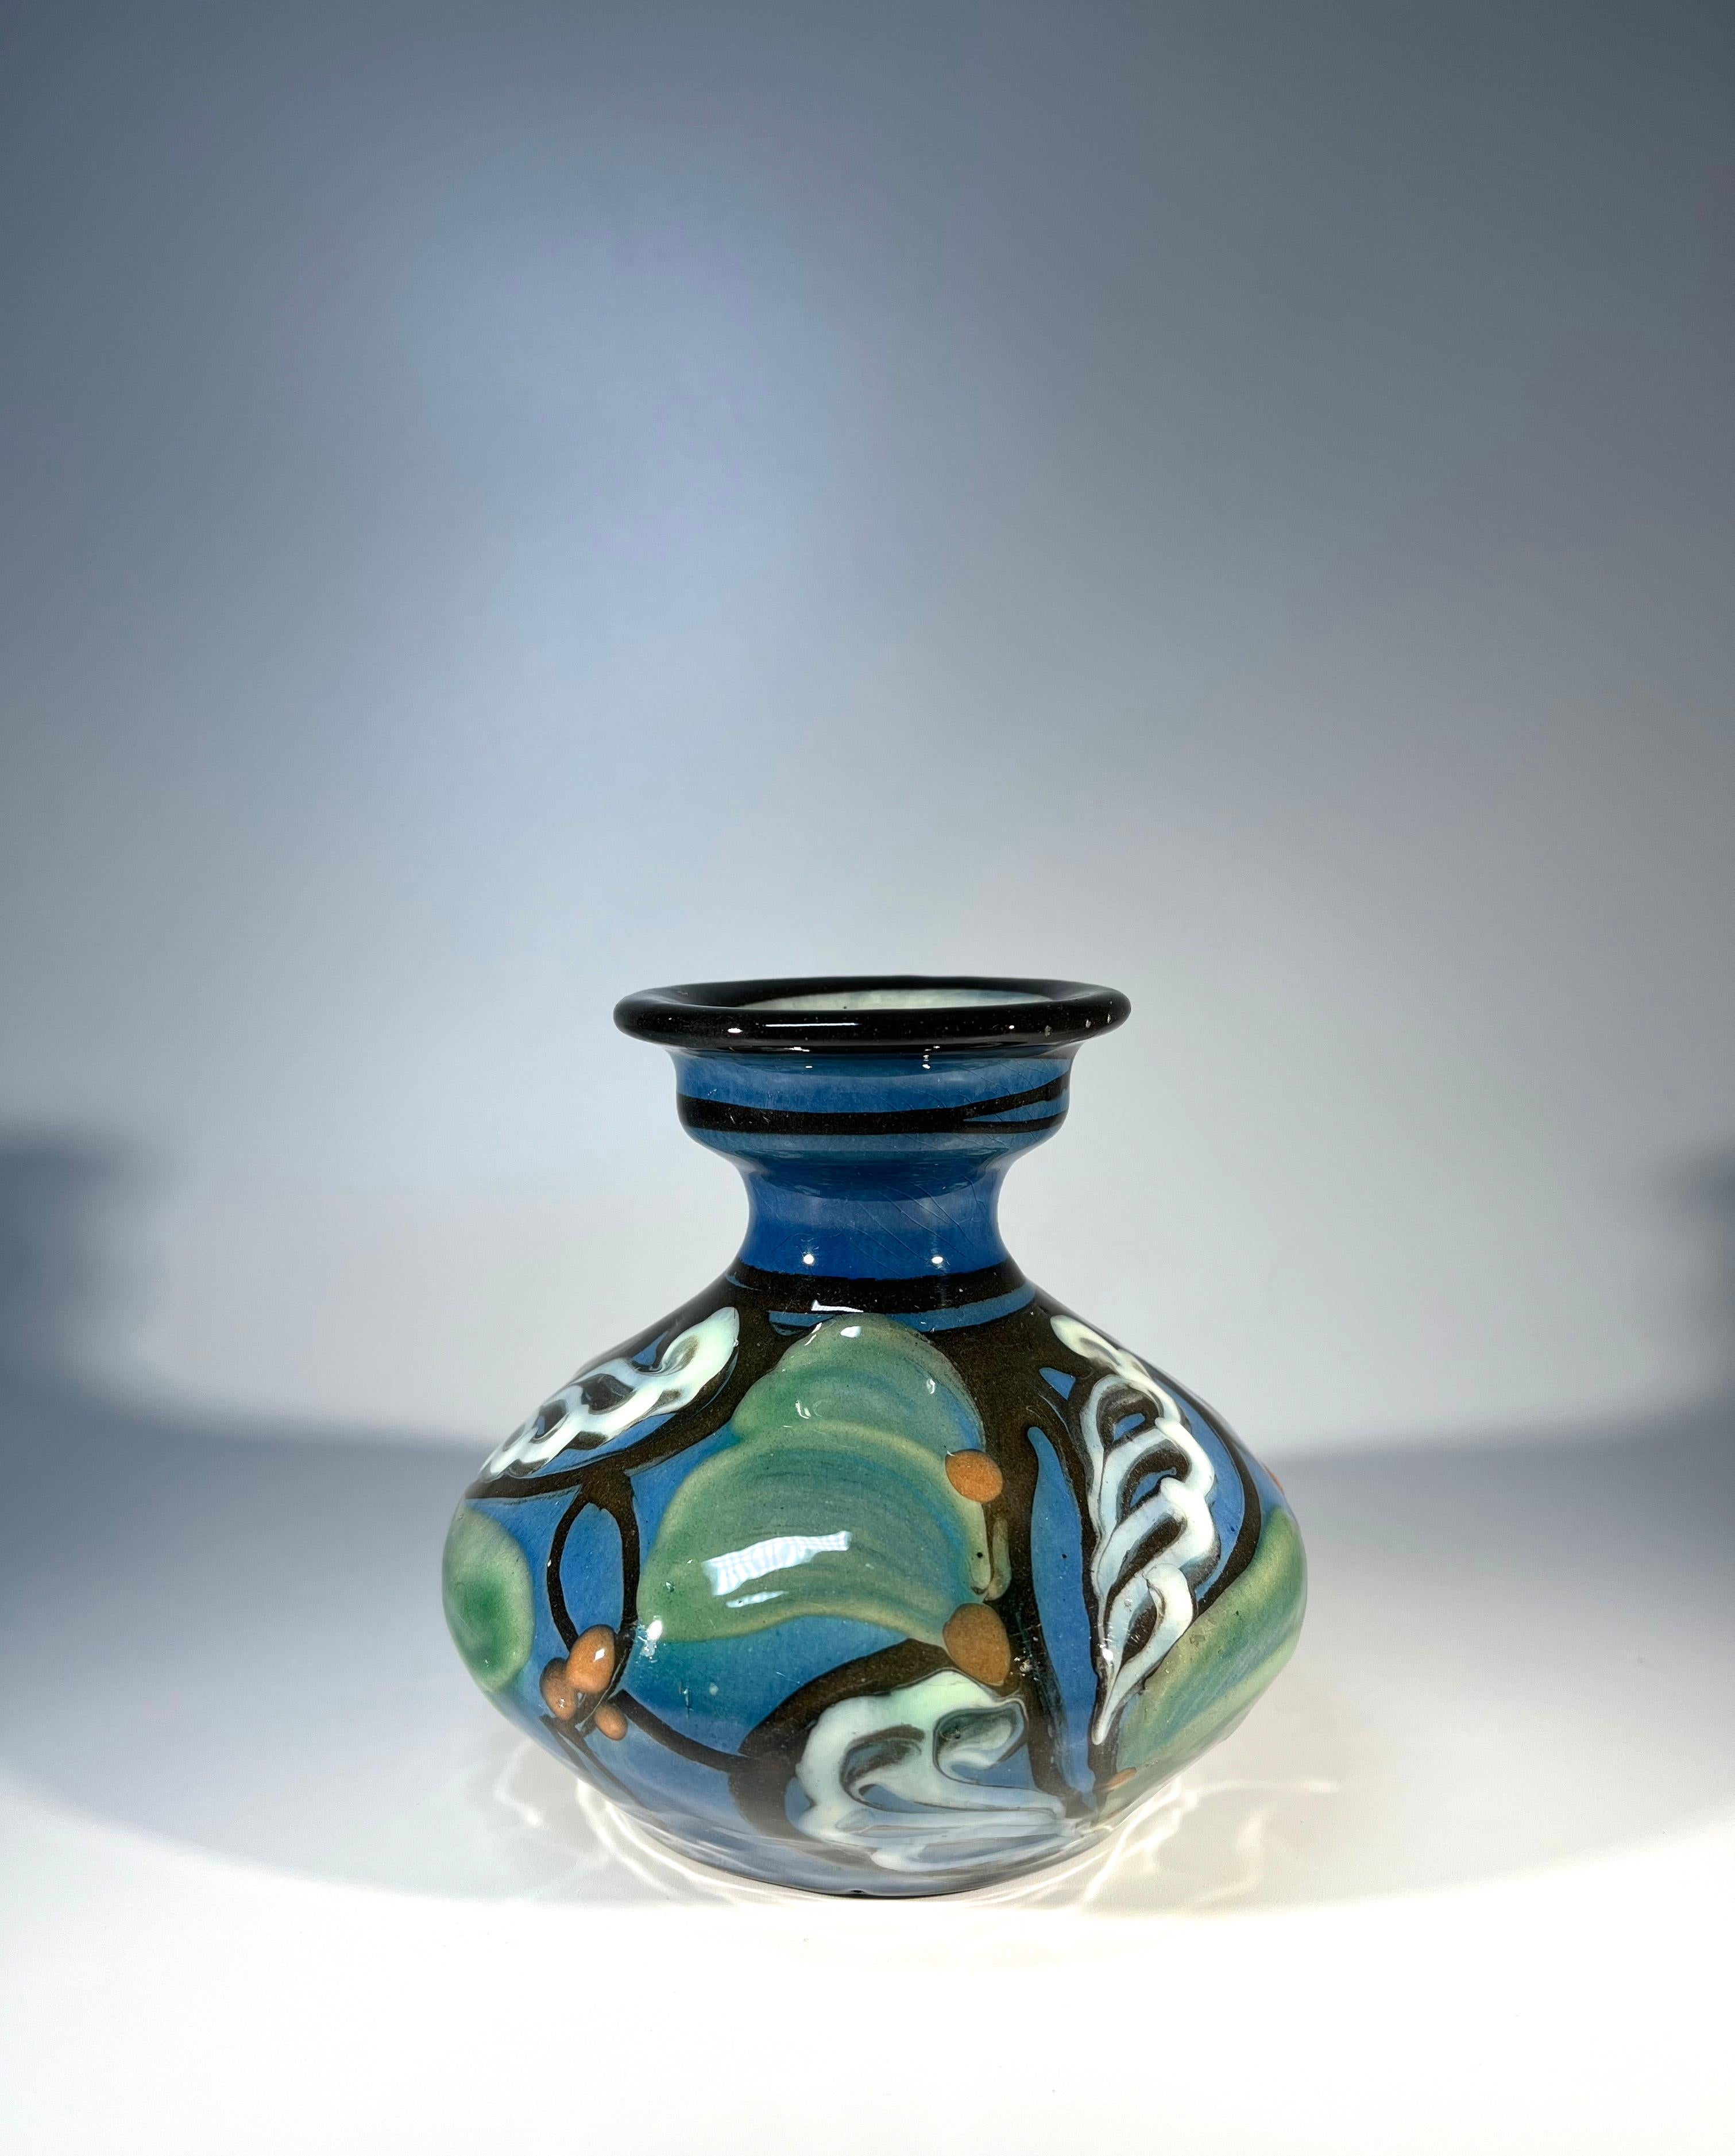 Danish Antique Art Nouveau Stylised Ceramic Vase By Horsens Danico, Denmark c1920